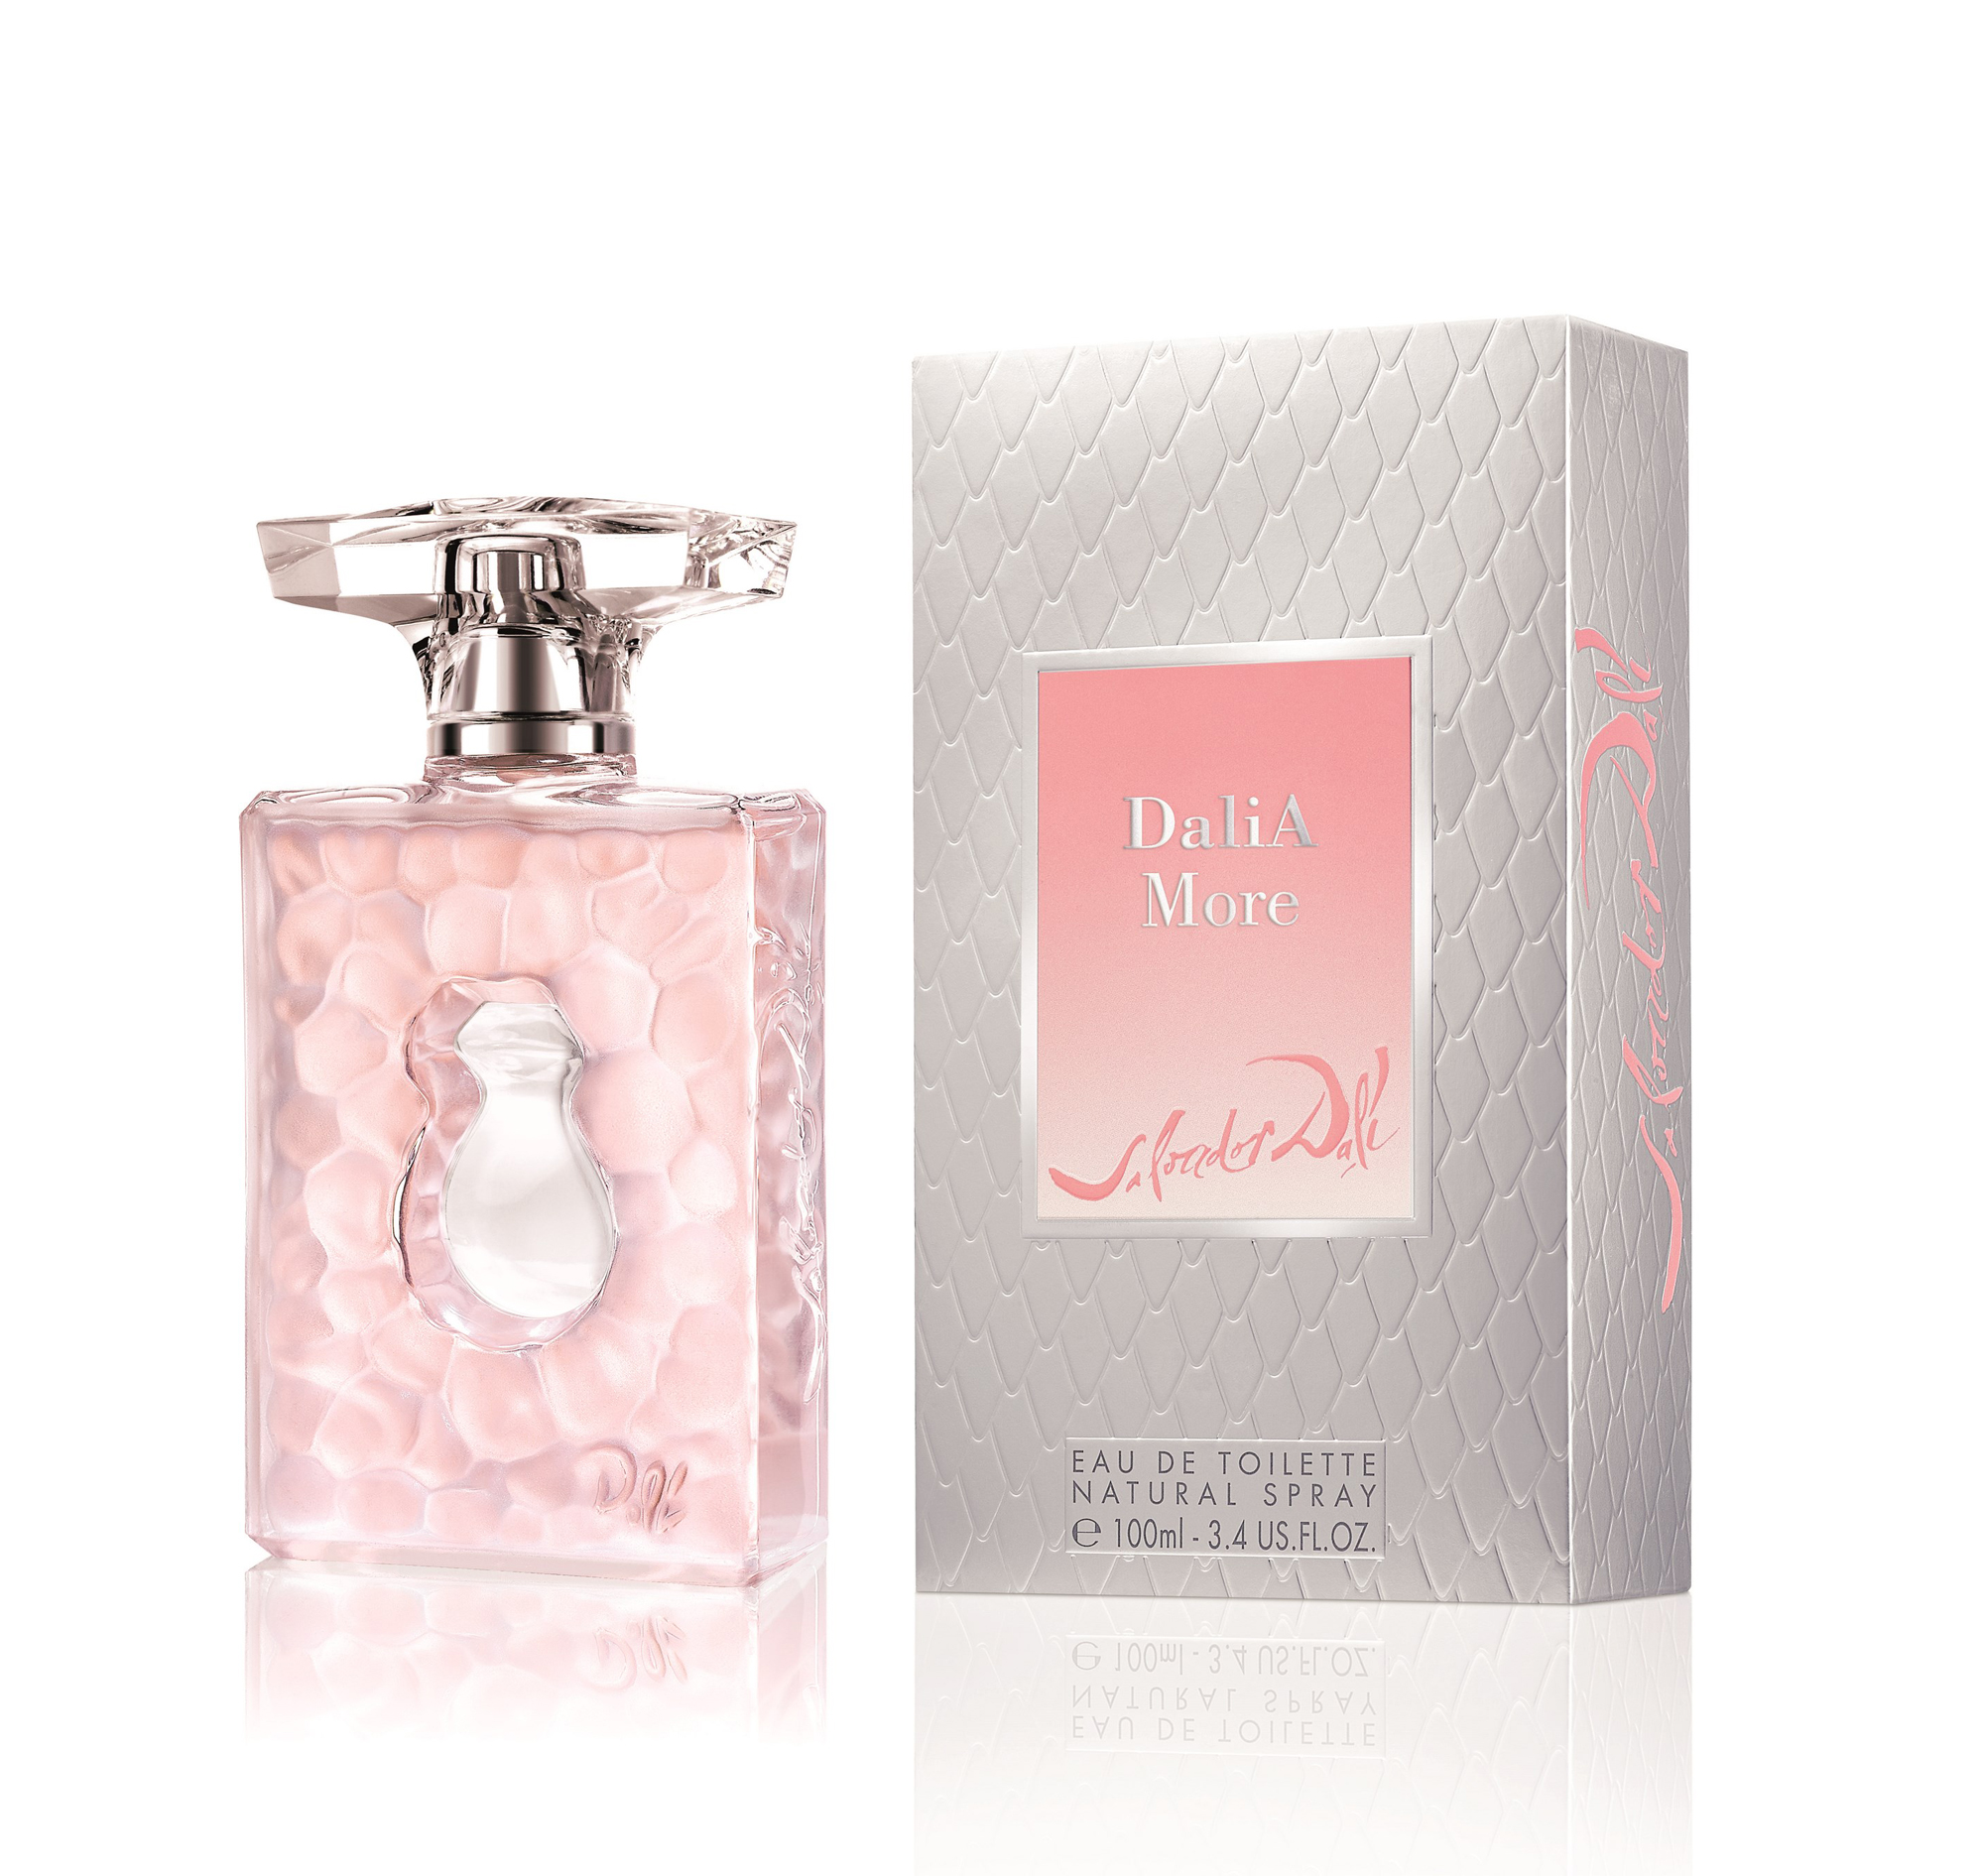 DaliA More Salvador Dali perfume - a fragrance for women 2019